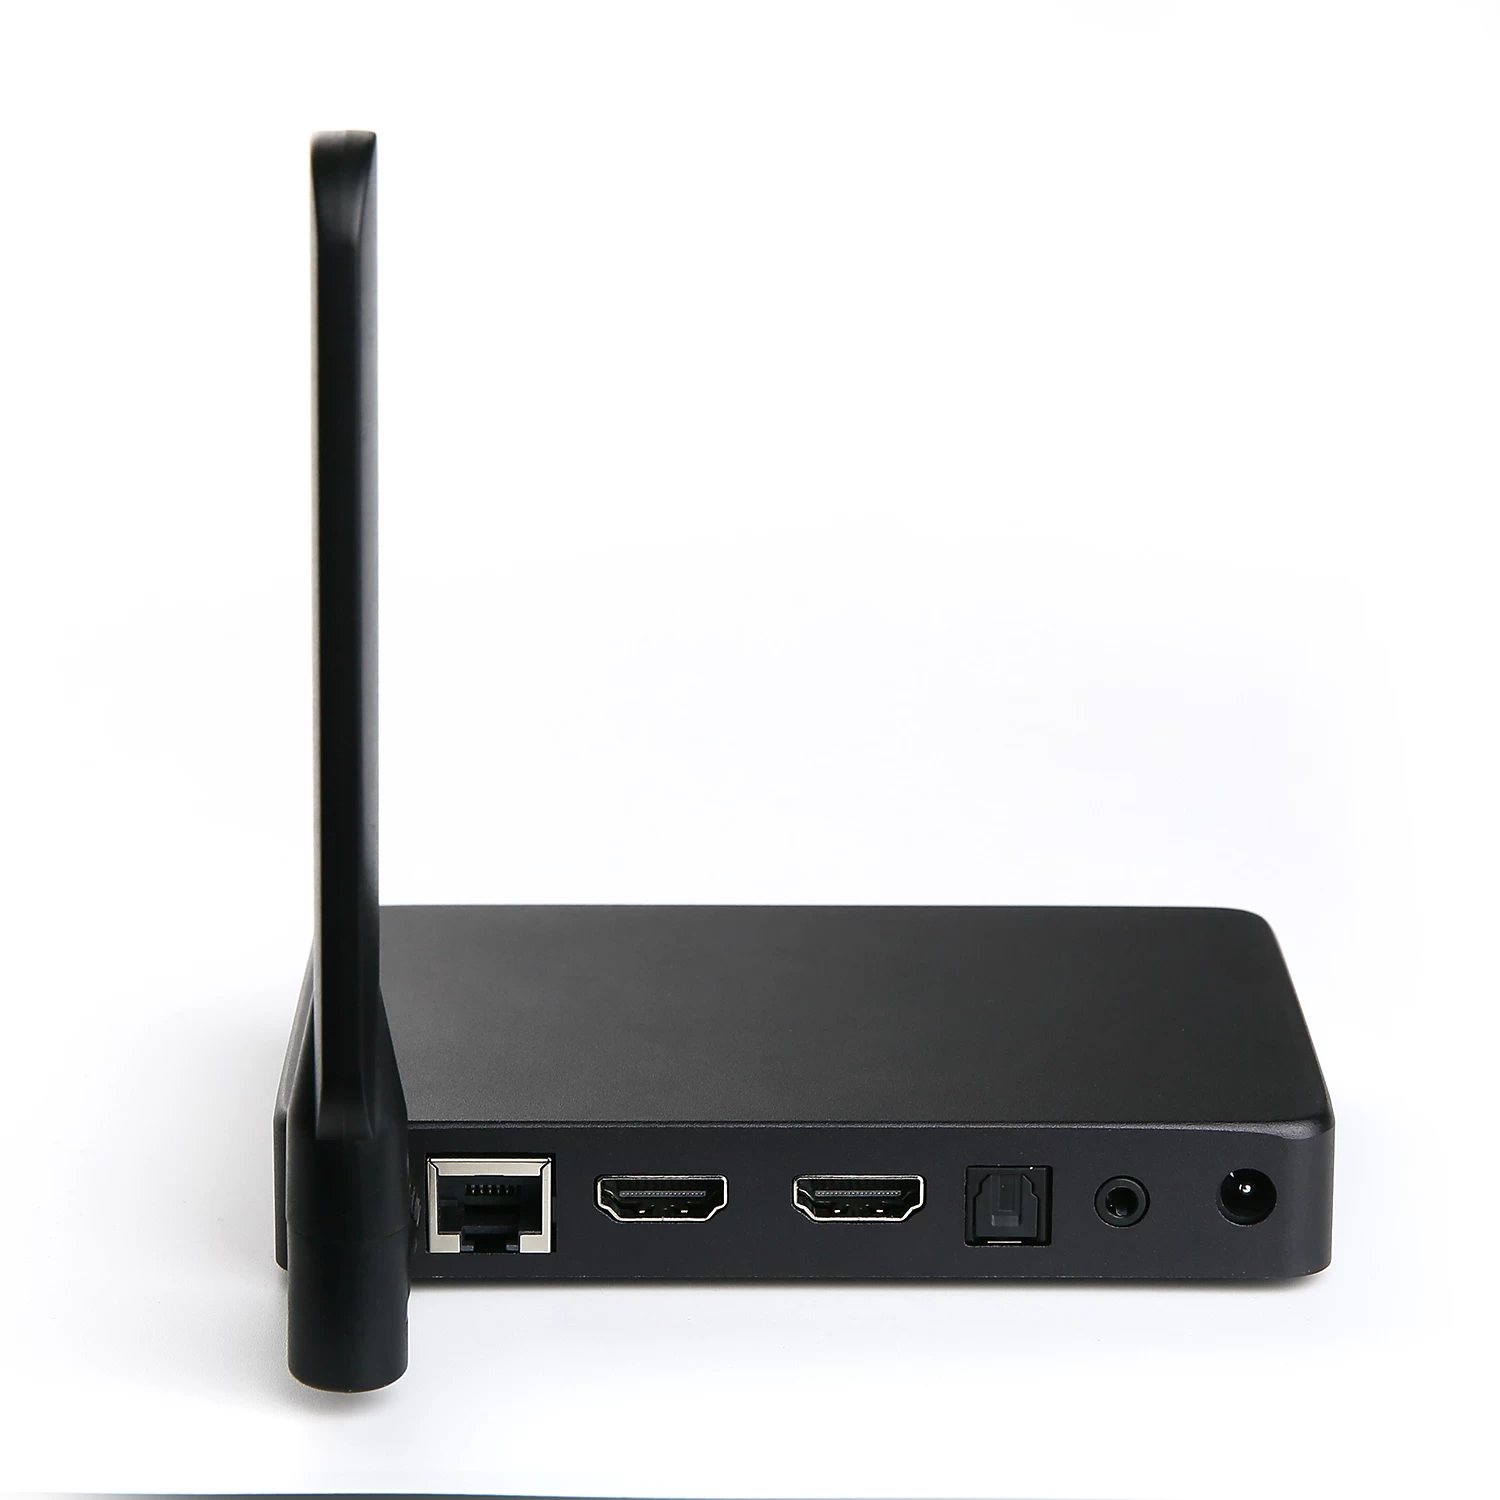 Set top box HDMI Input, Smart TV Box HDMI Input